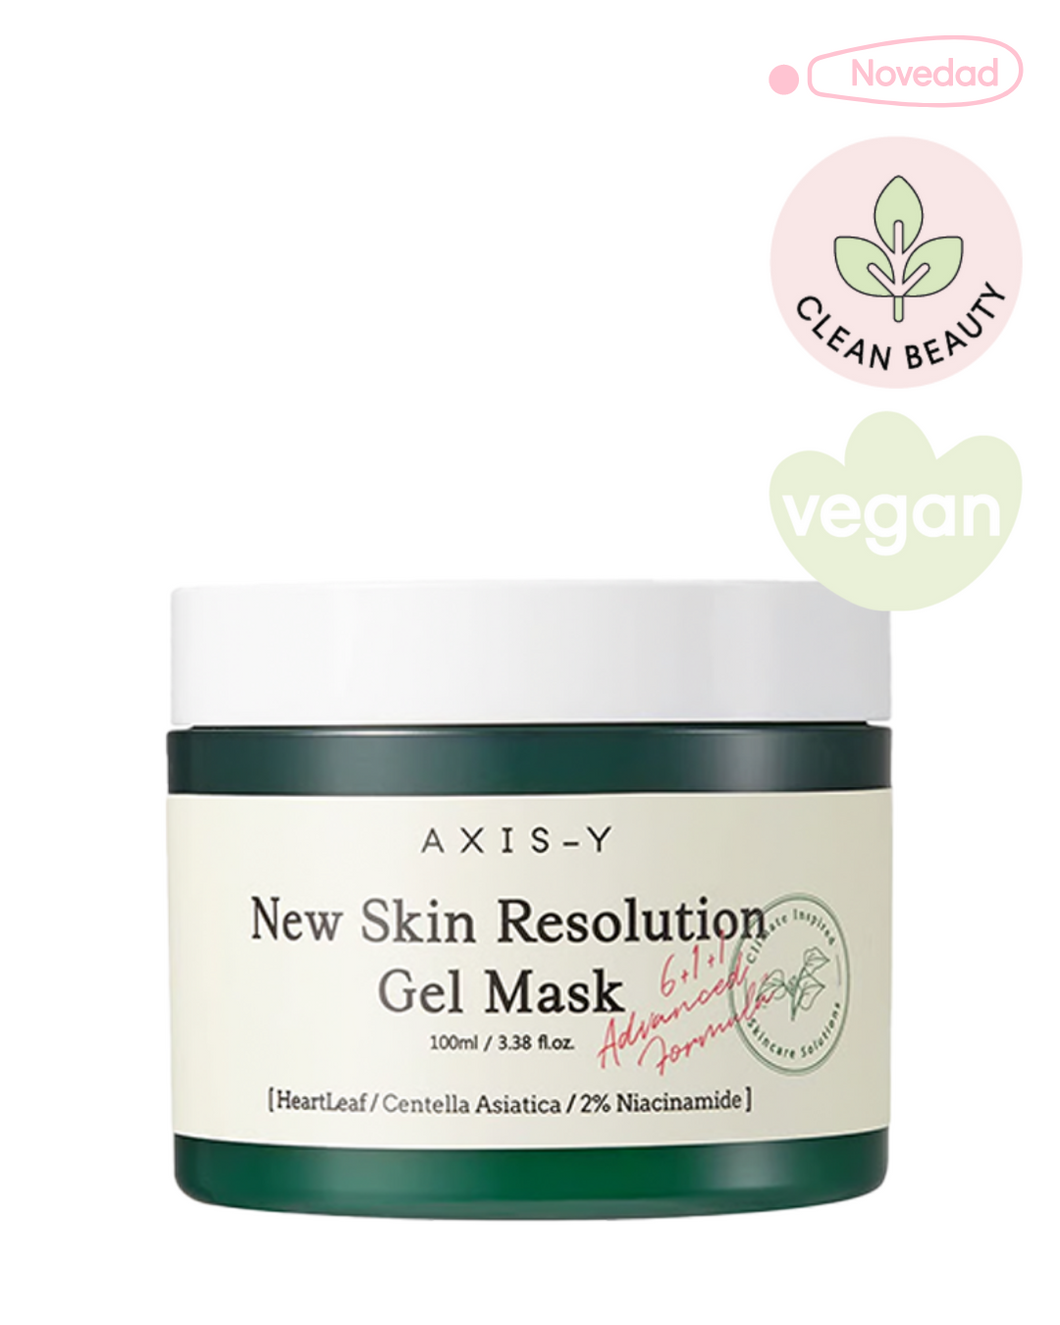 Axis-Y - New Skin Resolution Gel Mask